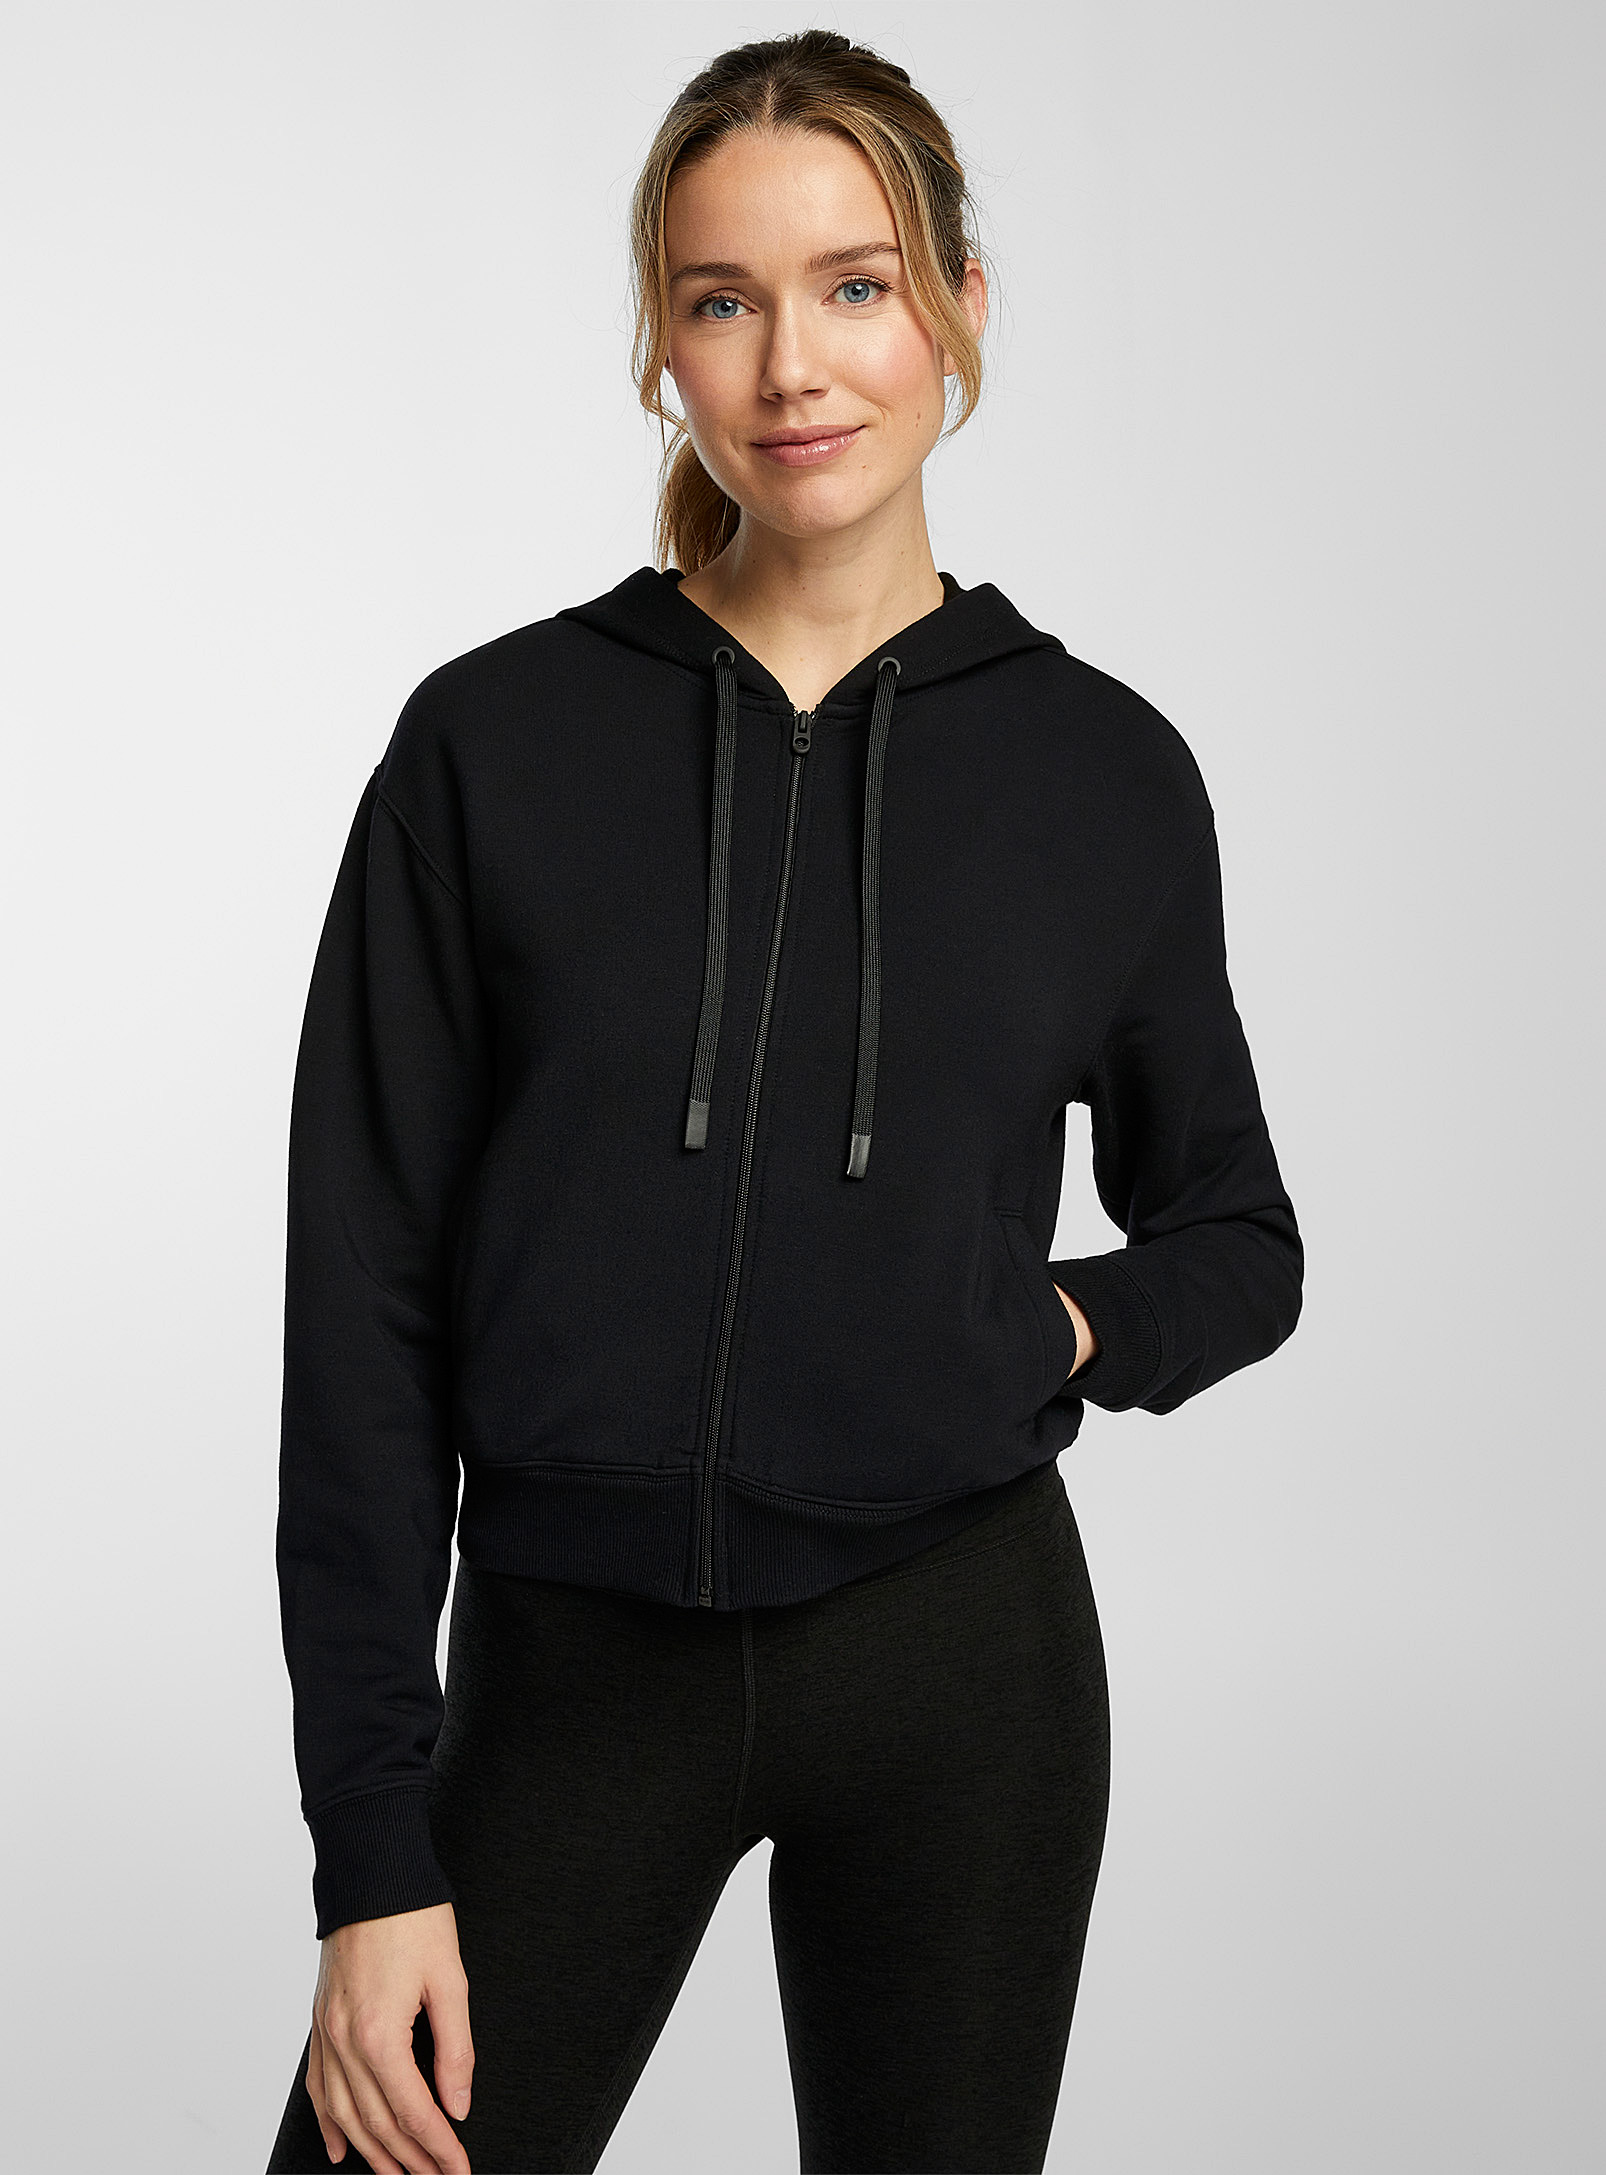 I.FIV5 - Women's Ultra-soft zip-up hoodie